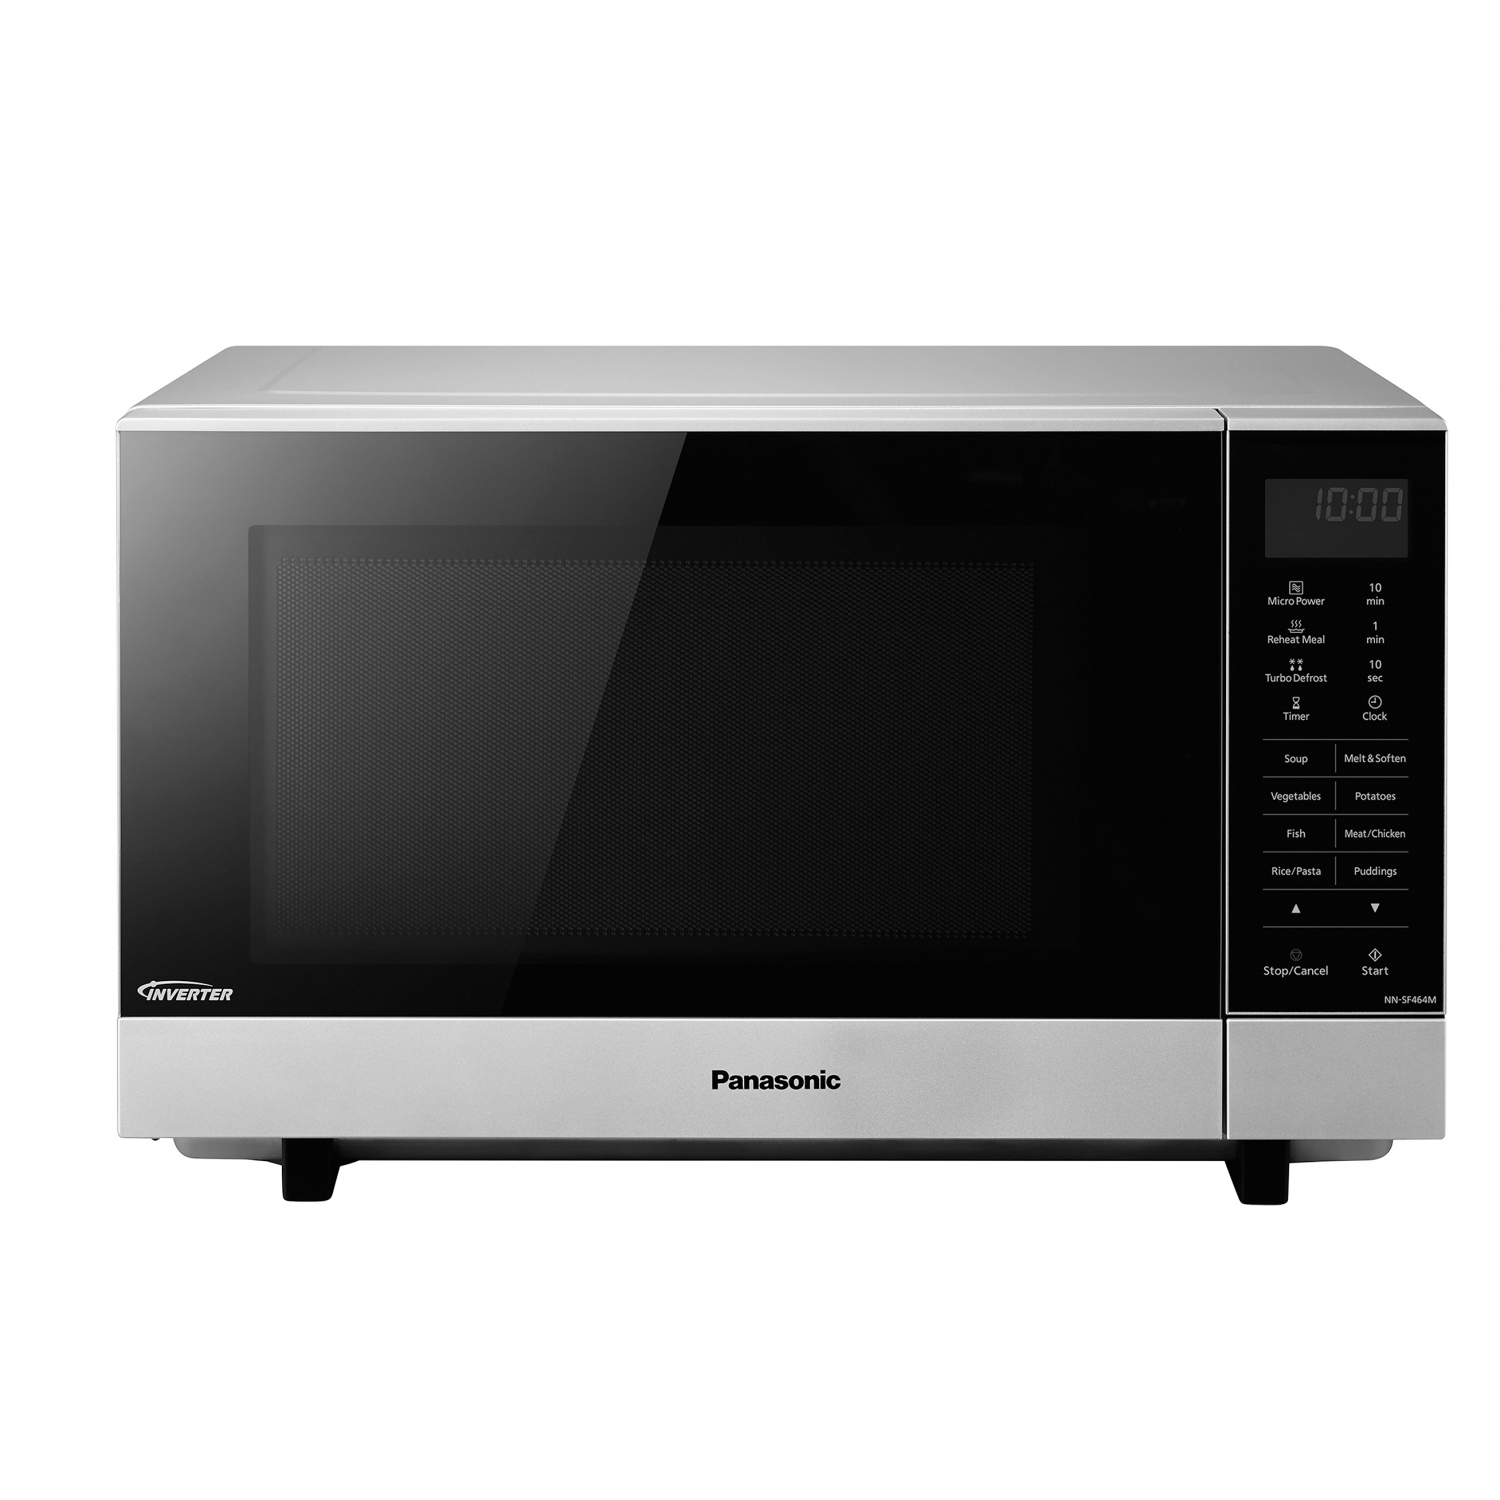 Panasonic 27L Flatbed 1000w Microwave - 0